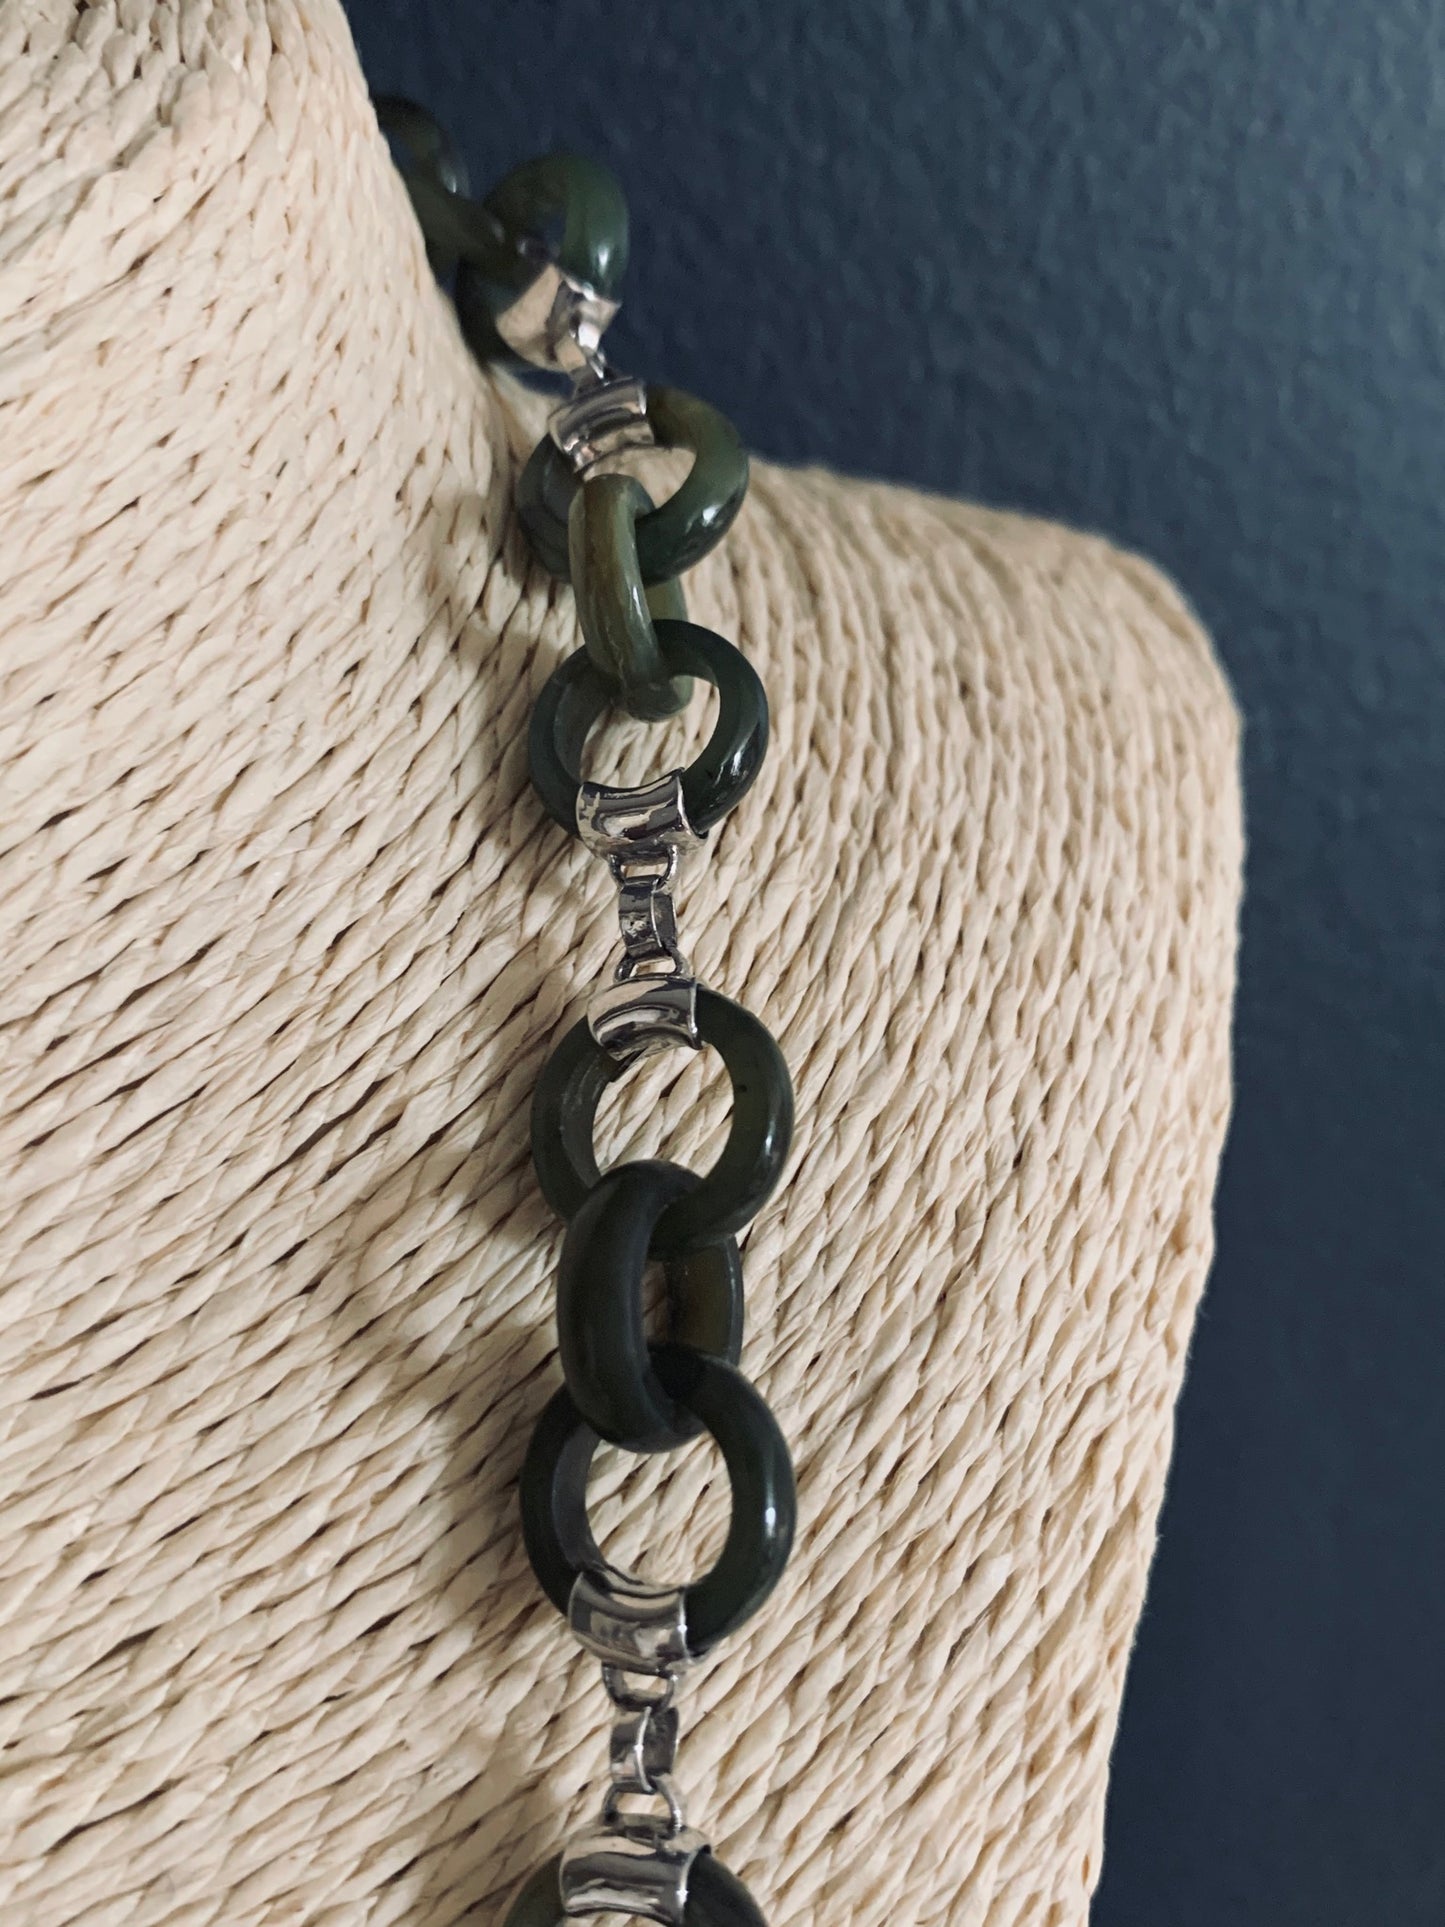 A vintage nephrite necklace